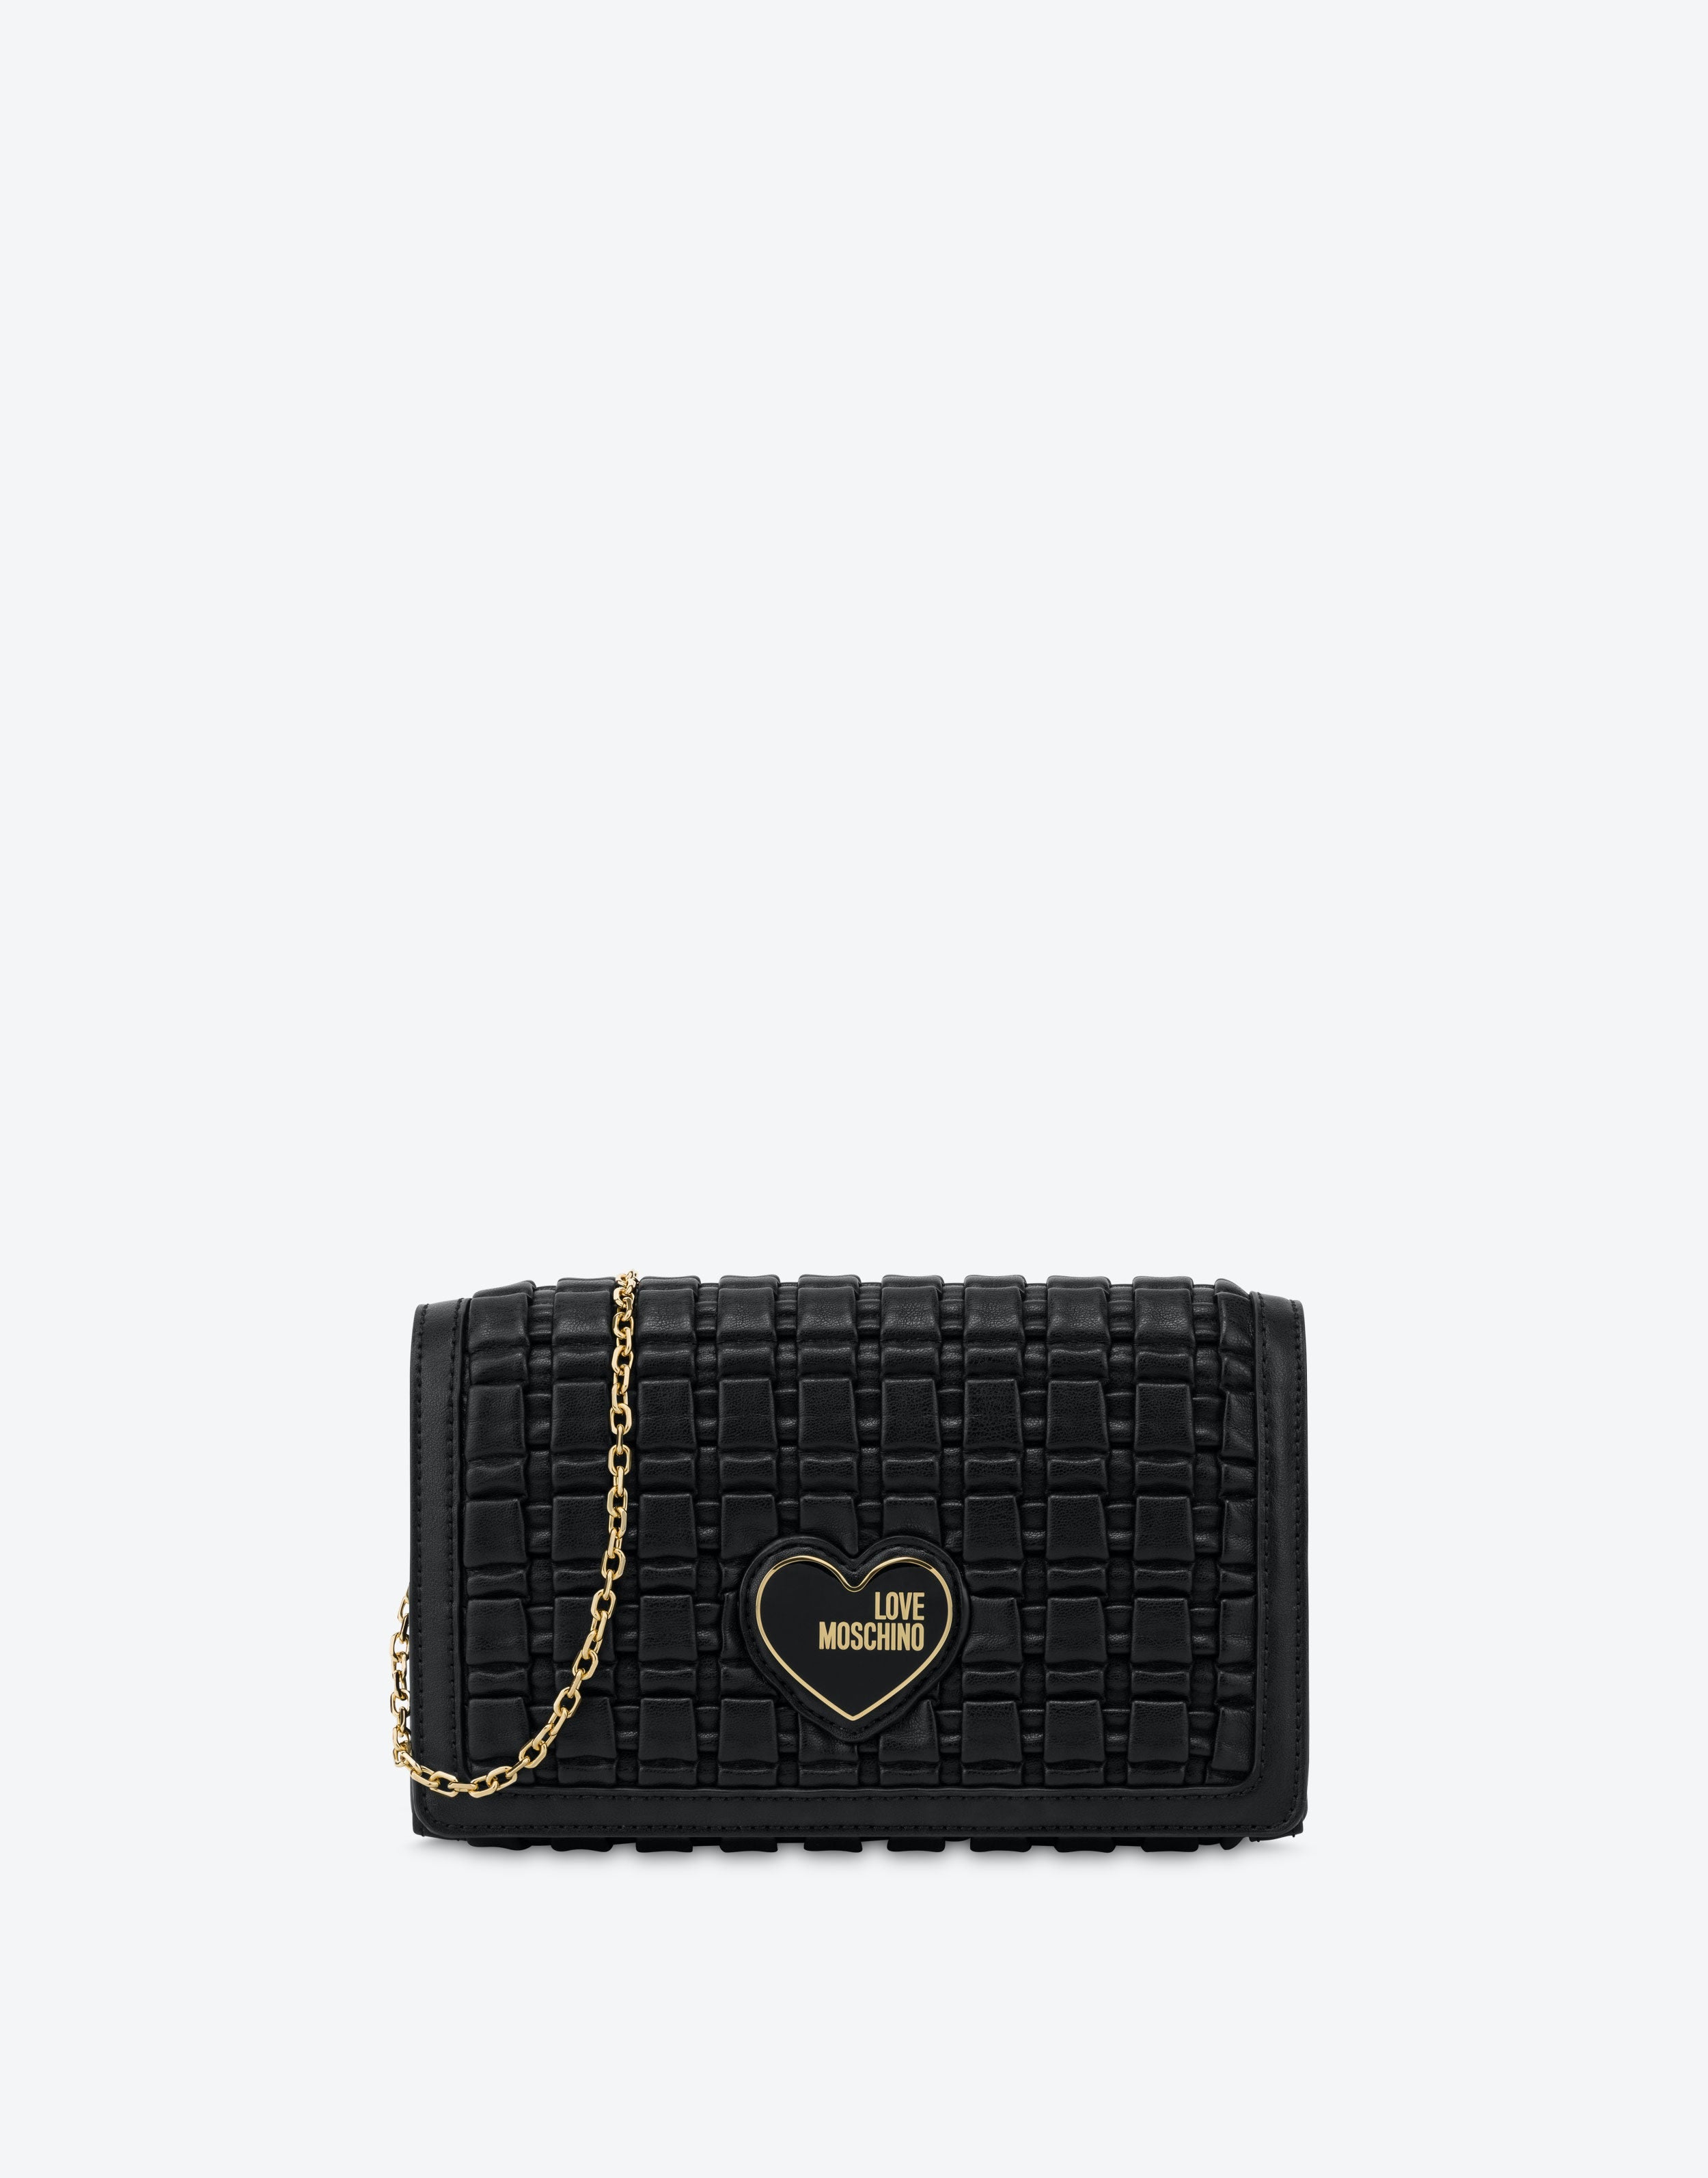 Love Moschino Woven Bag Black Gold